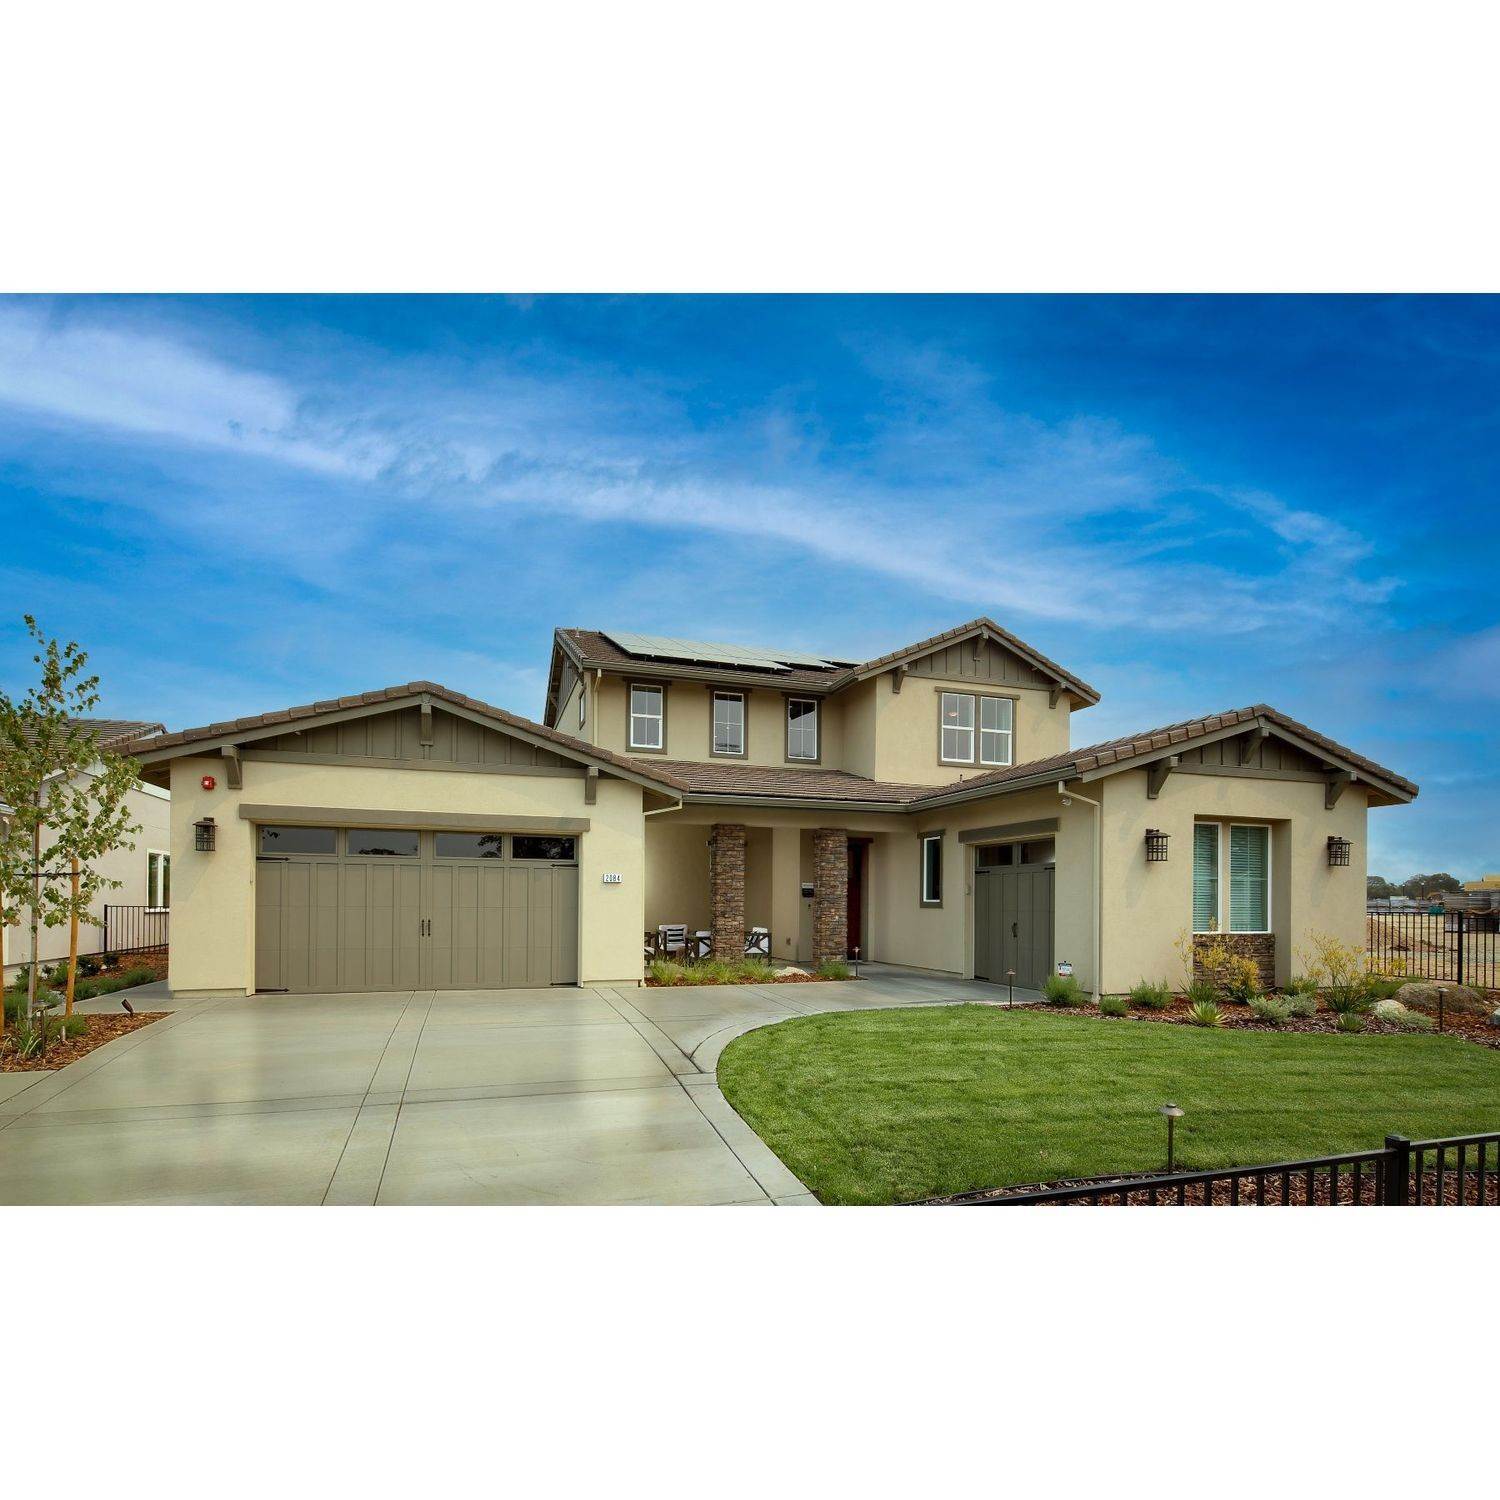 17. Turkey Creek Estates building at 2036 Pinehurst Drive, Lincoln, CA 95648